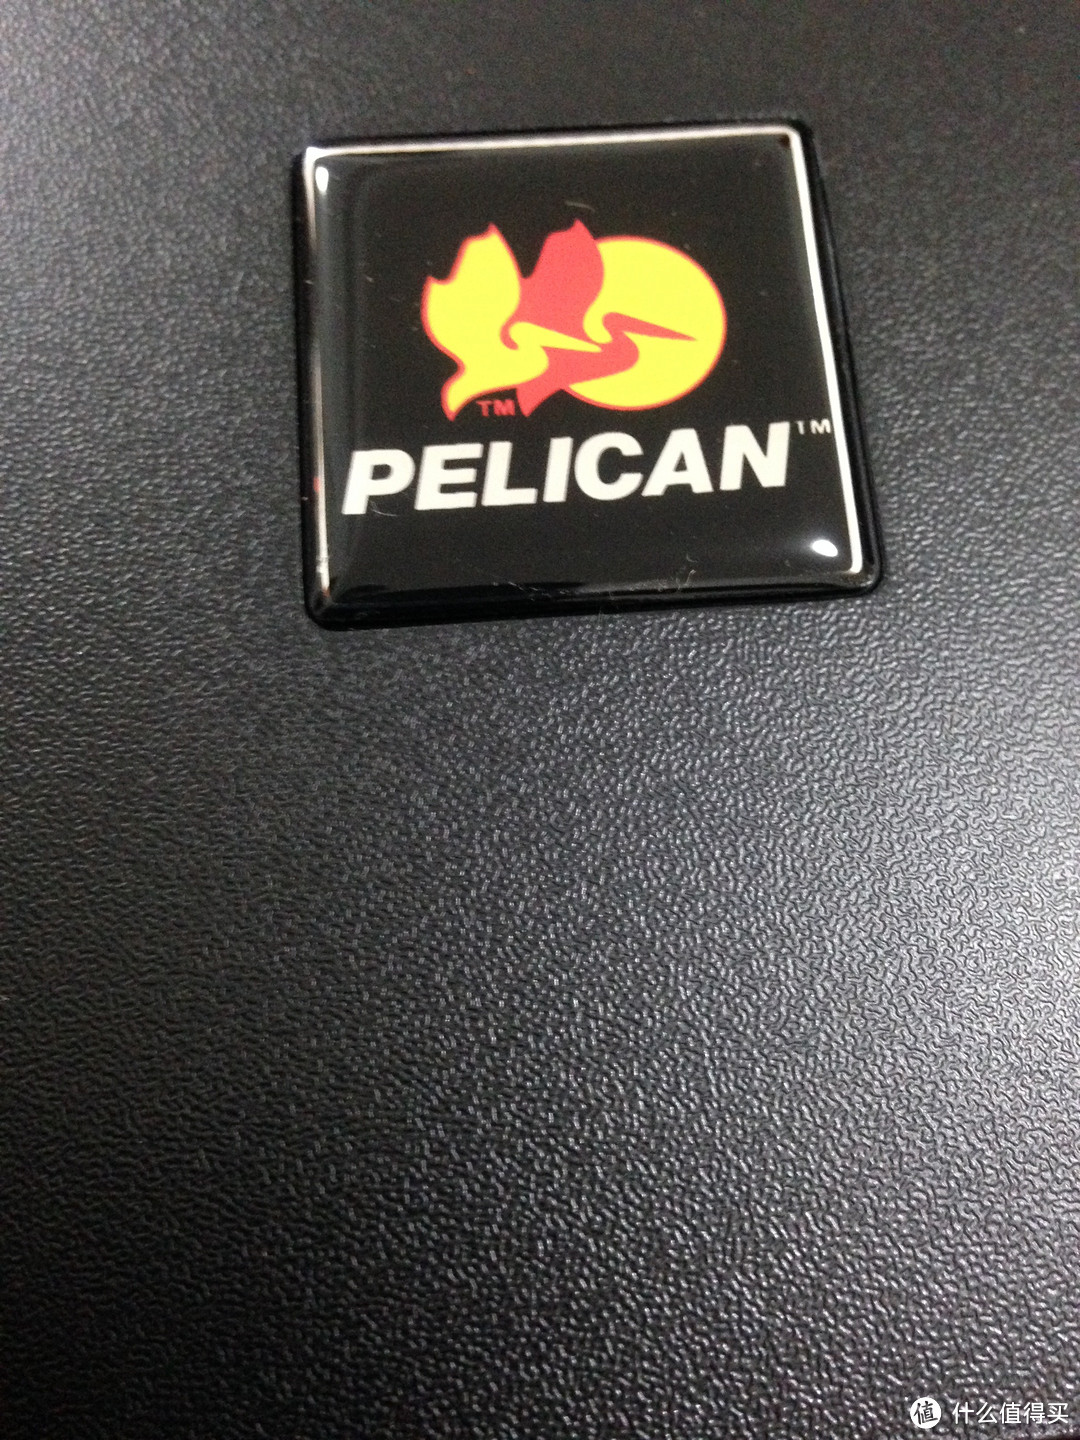 Pelican 派力肯 Products OU1050-0003-111 ProGear Lite 双肩电脑包